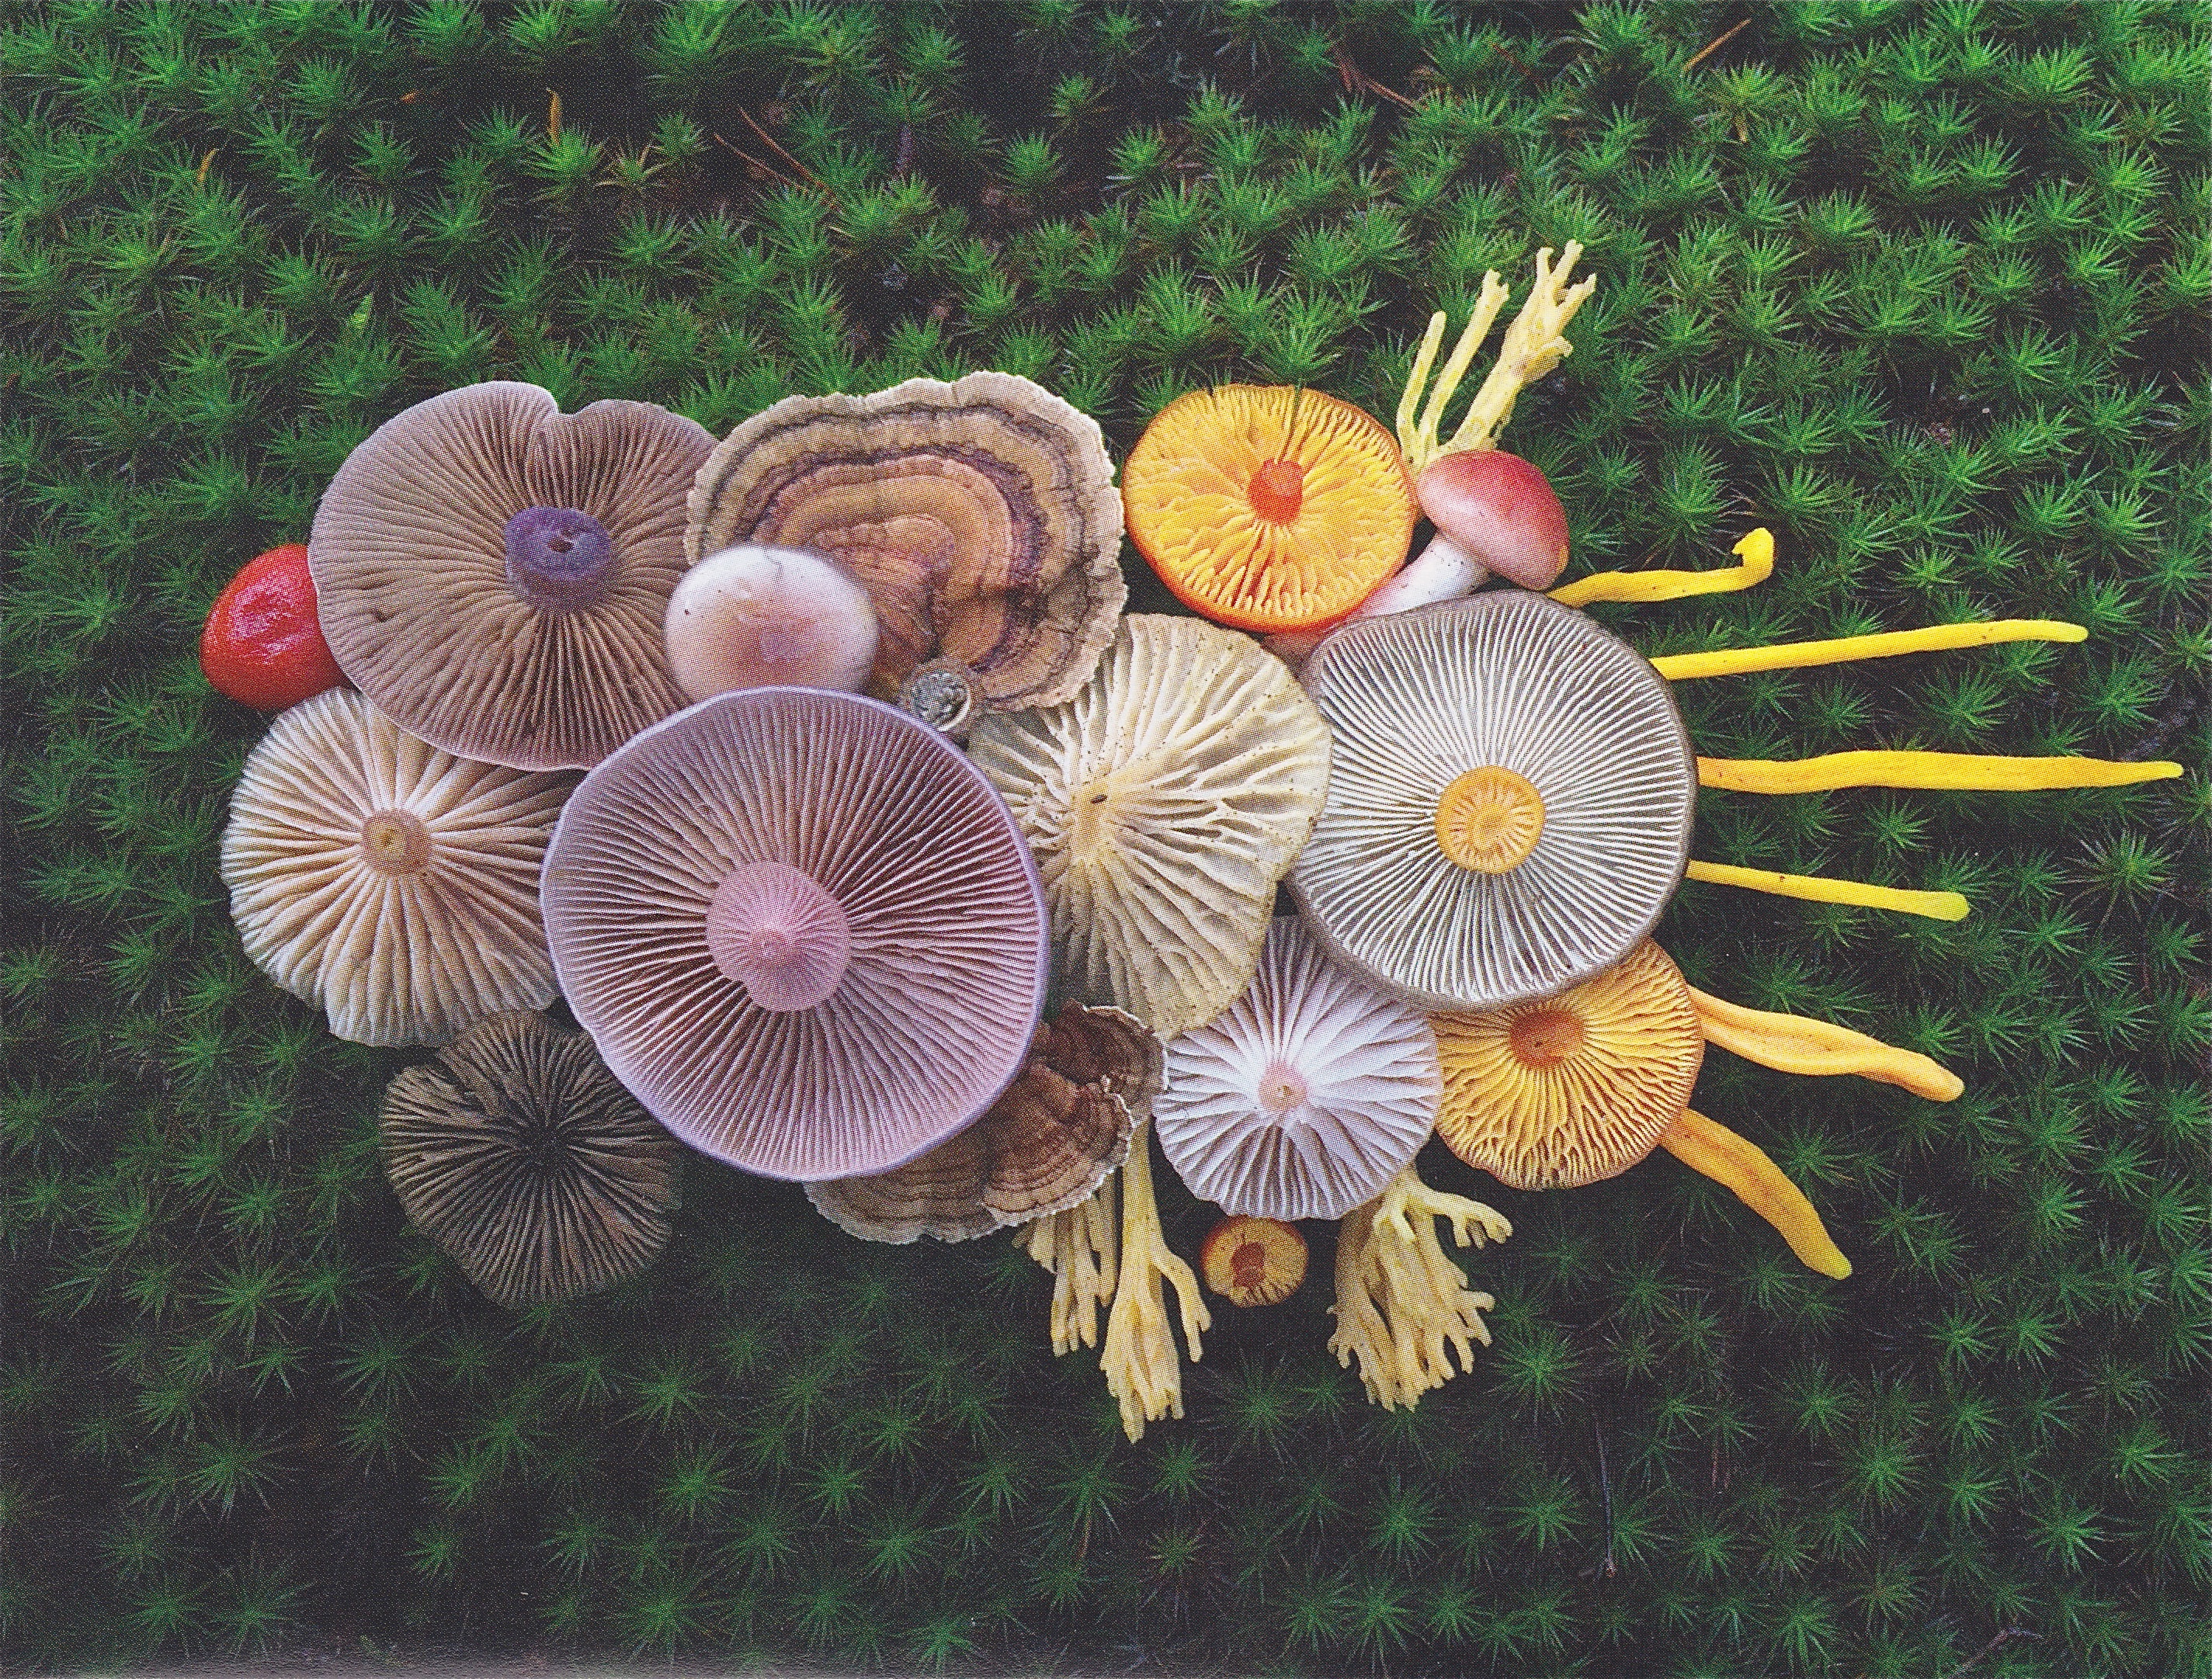 June 2017 – Central Oregon Mushroom Club